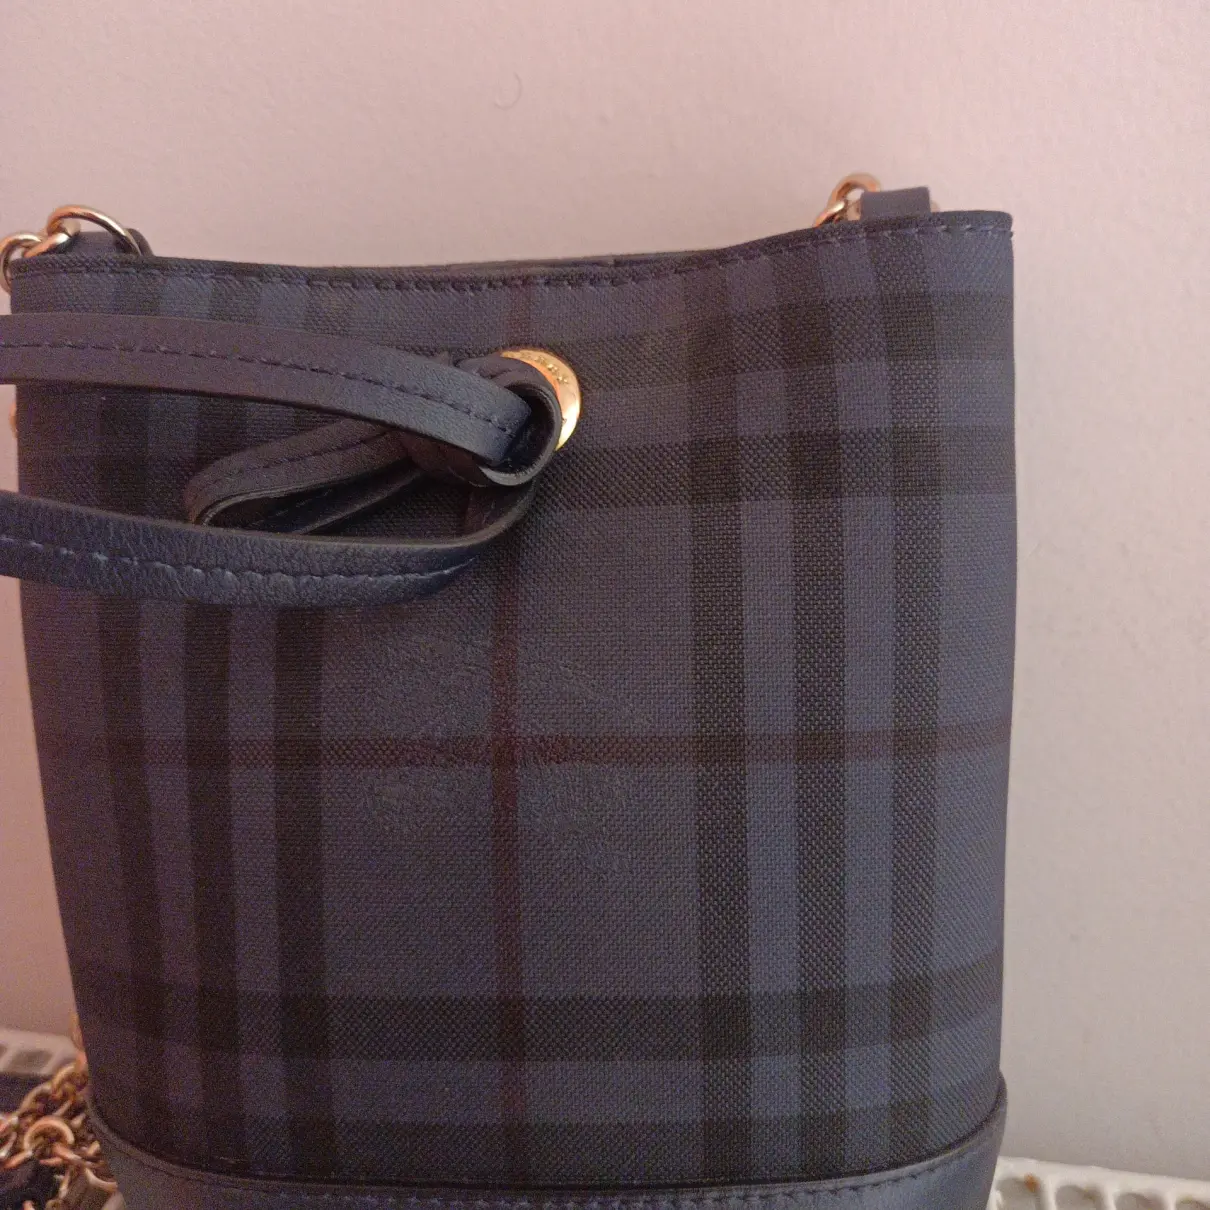 Buy Burberry Cloth crossbody bag online